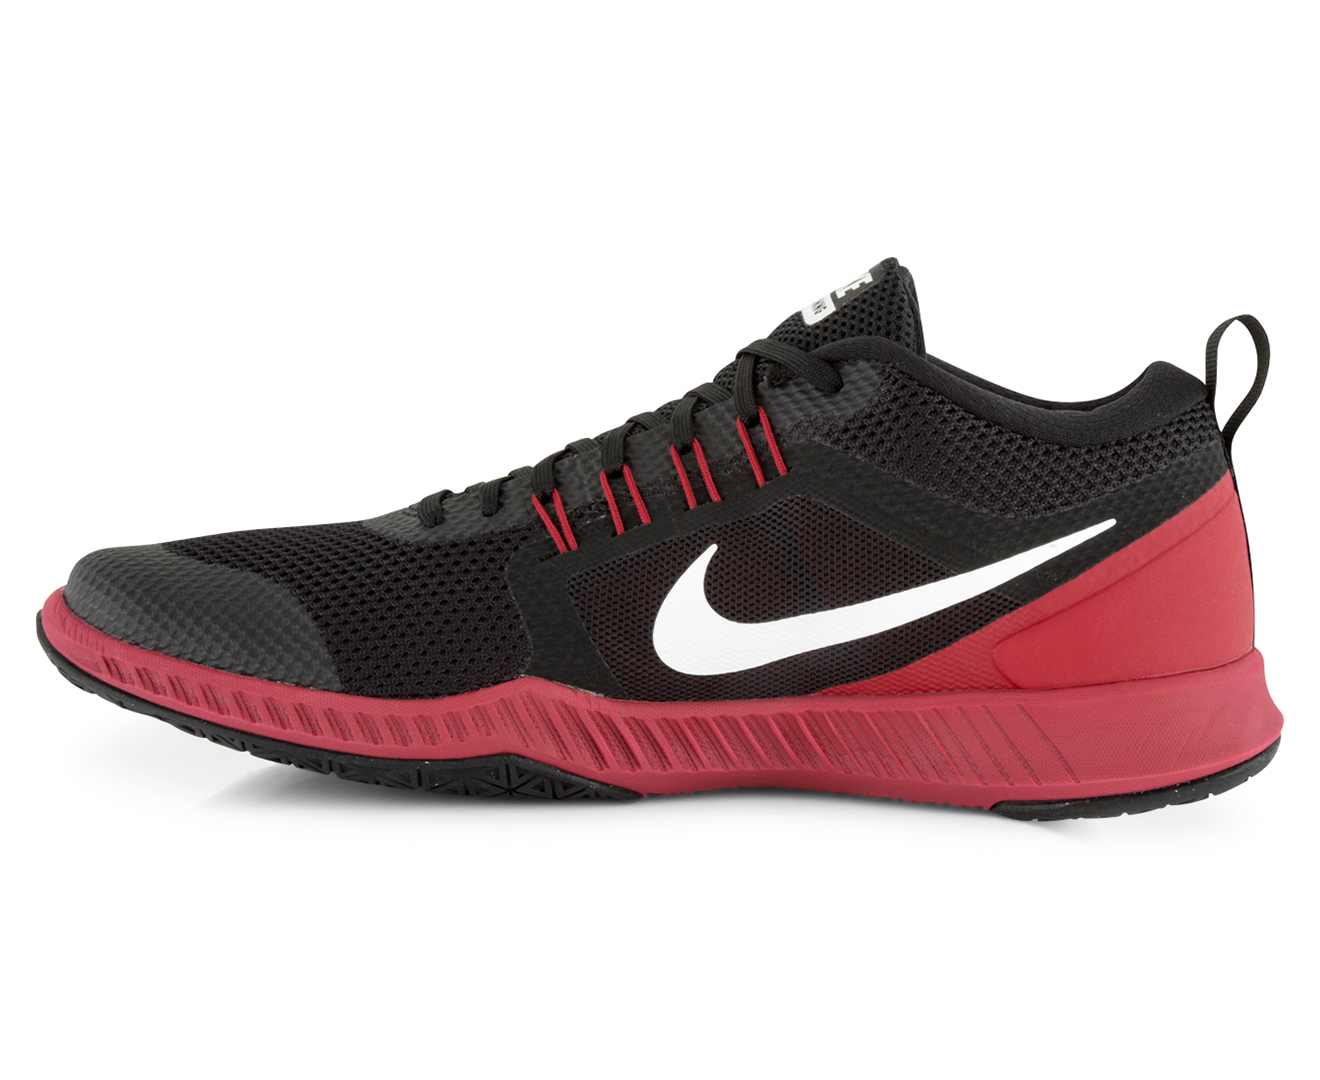 Nike Men's Zoom Domination TR Shoe - Black/White | Catch.co.nz